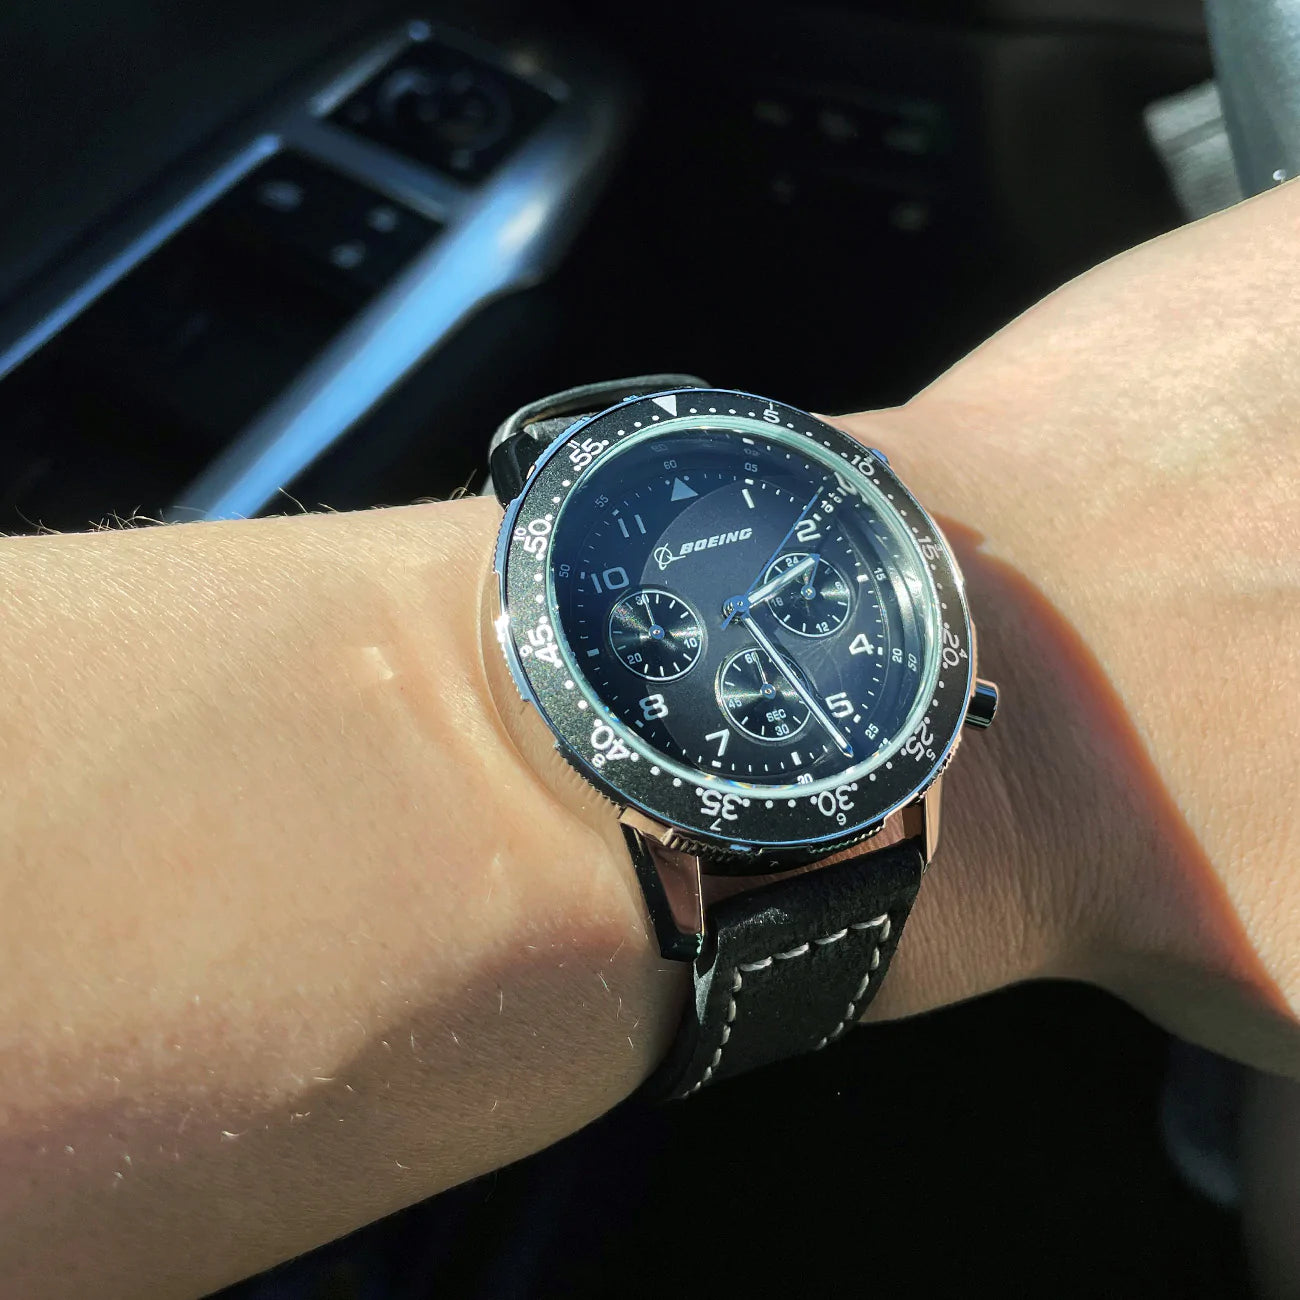 Boeing 'AVIATOR' Time Watch